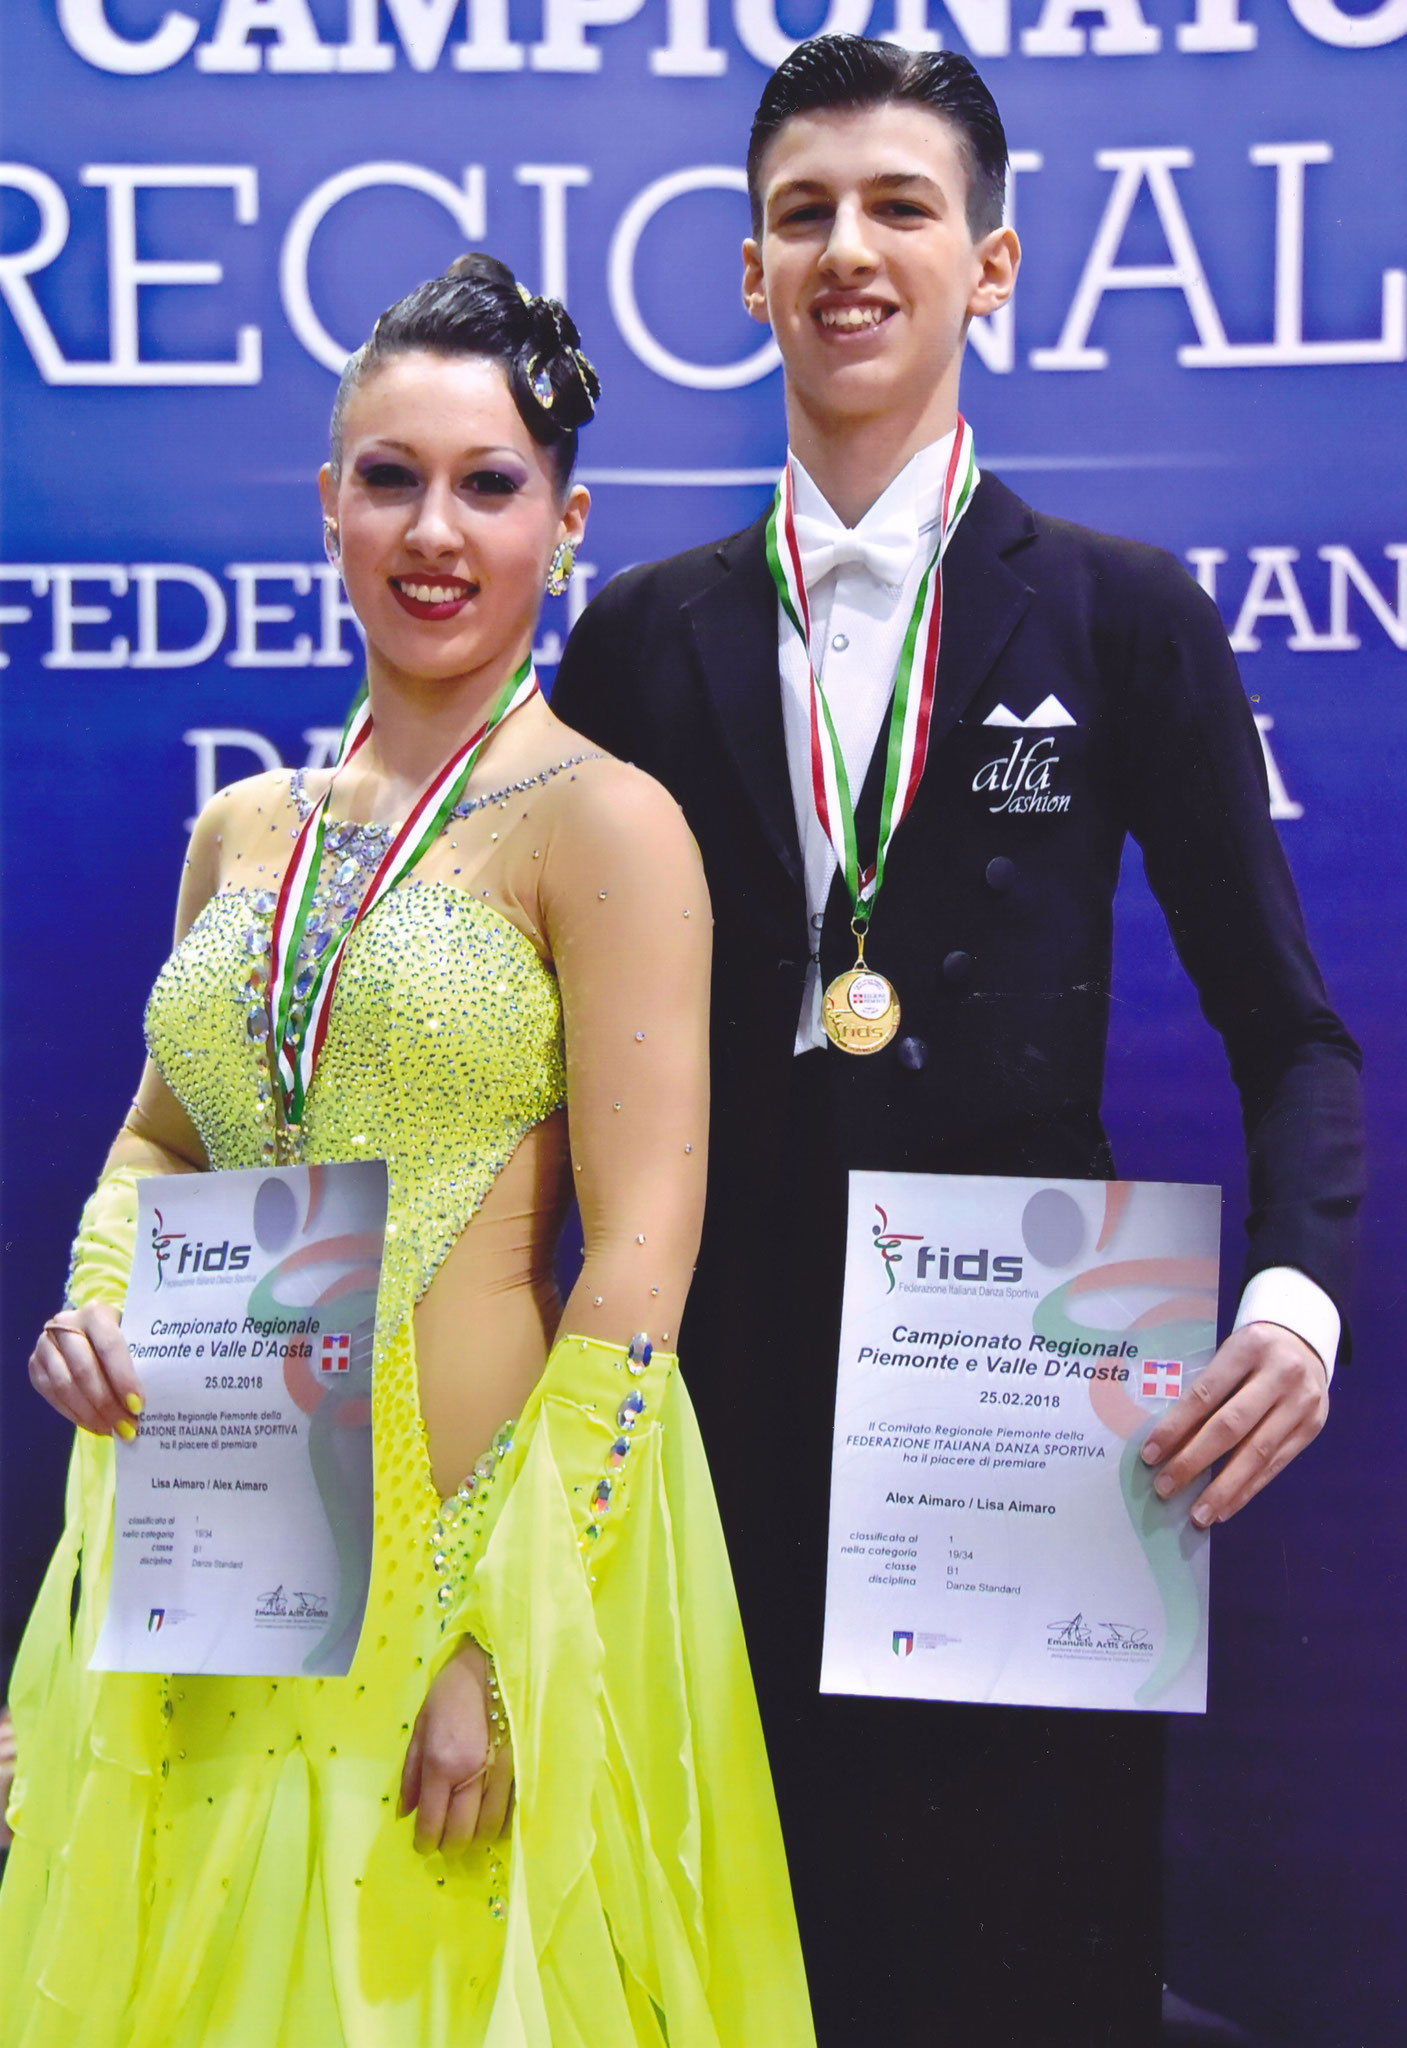 Aimaro Alex e Lisa - Regionale 2018